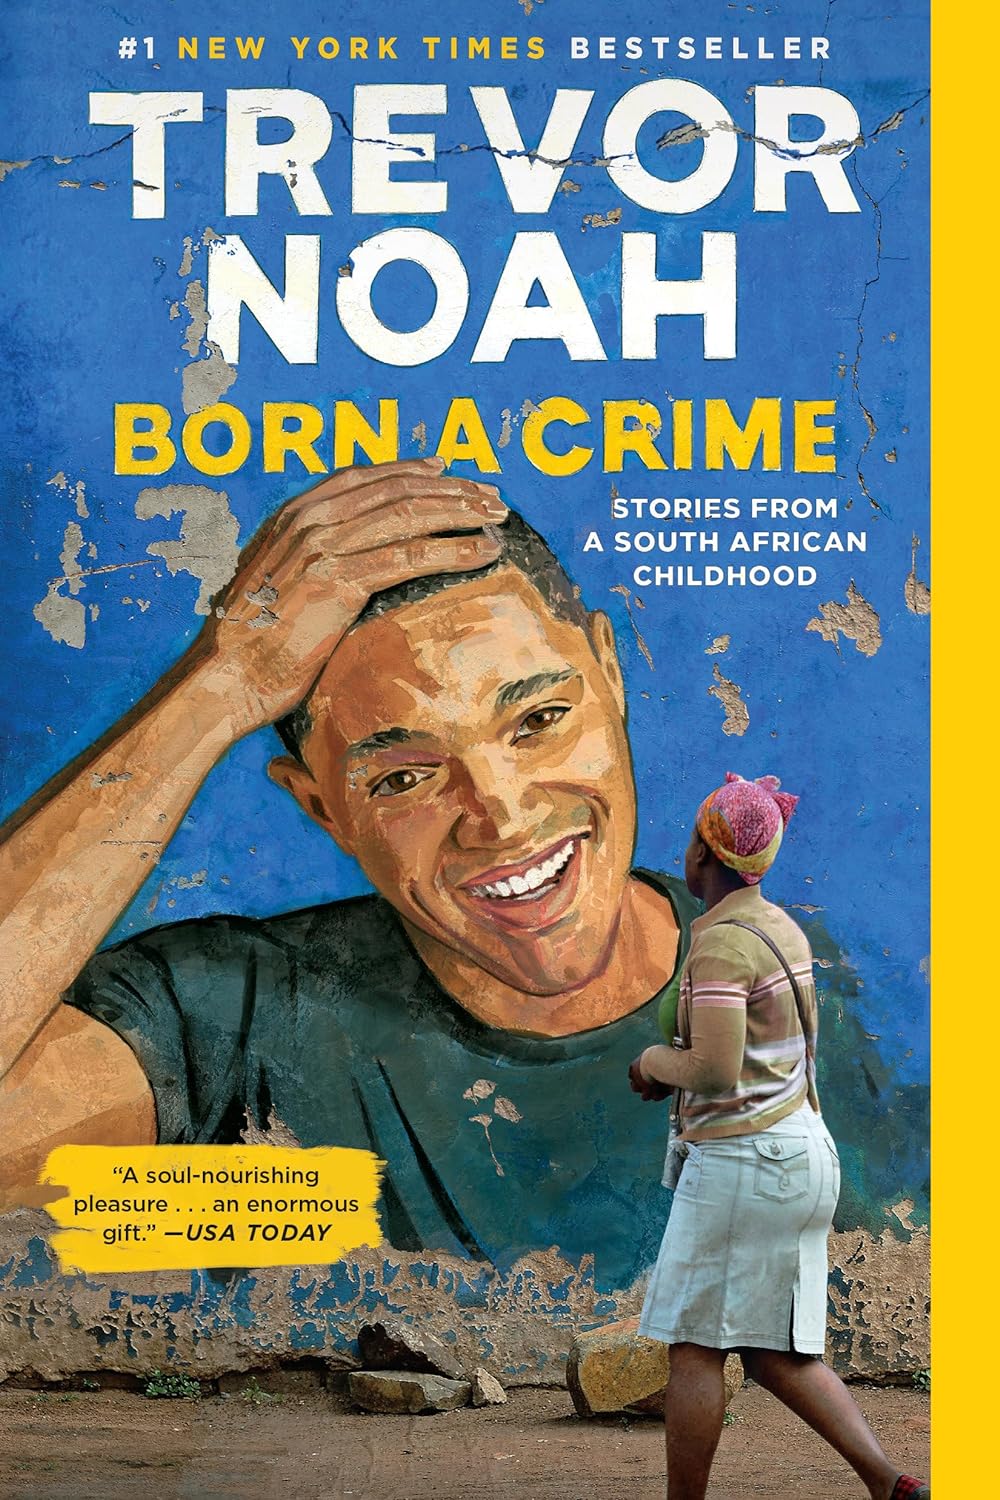 Book cover: "Born a Crime."